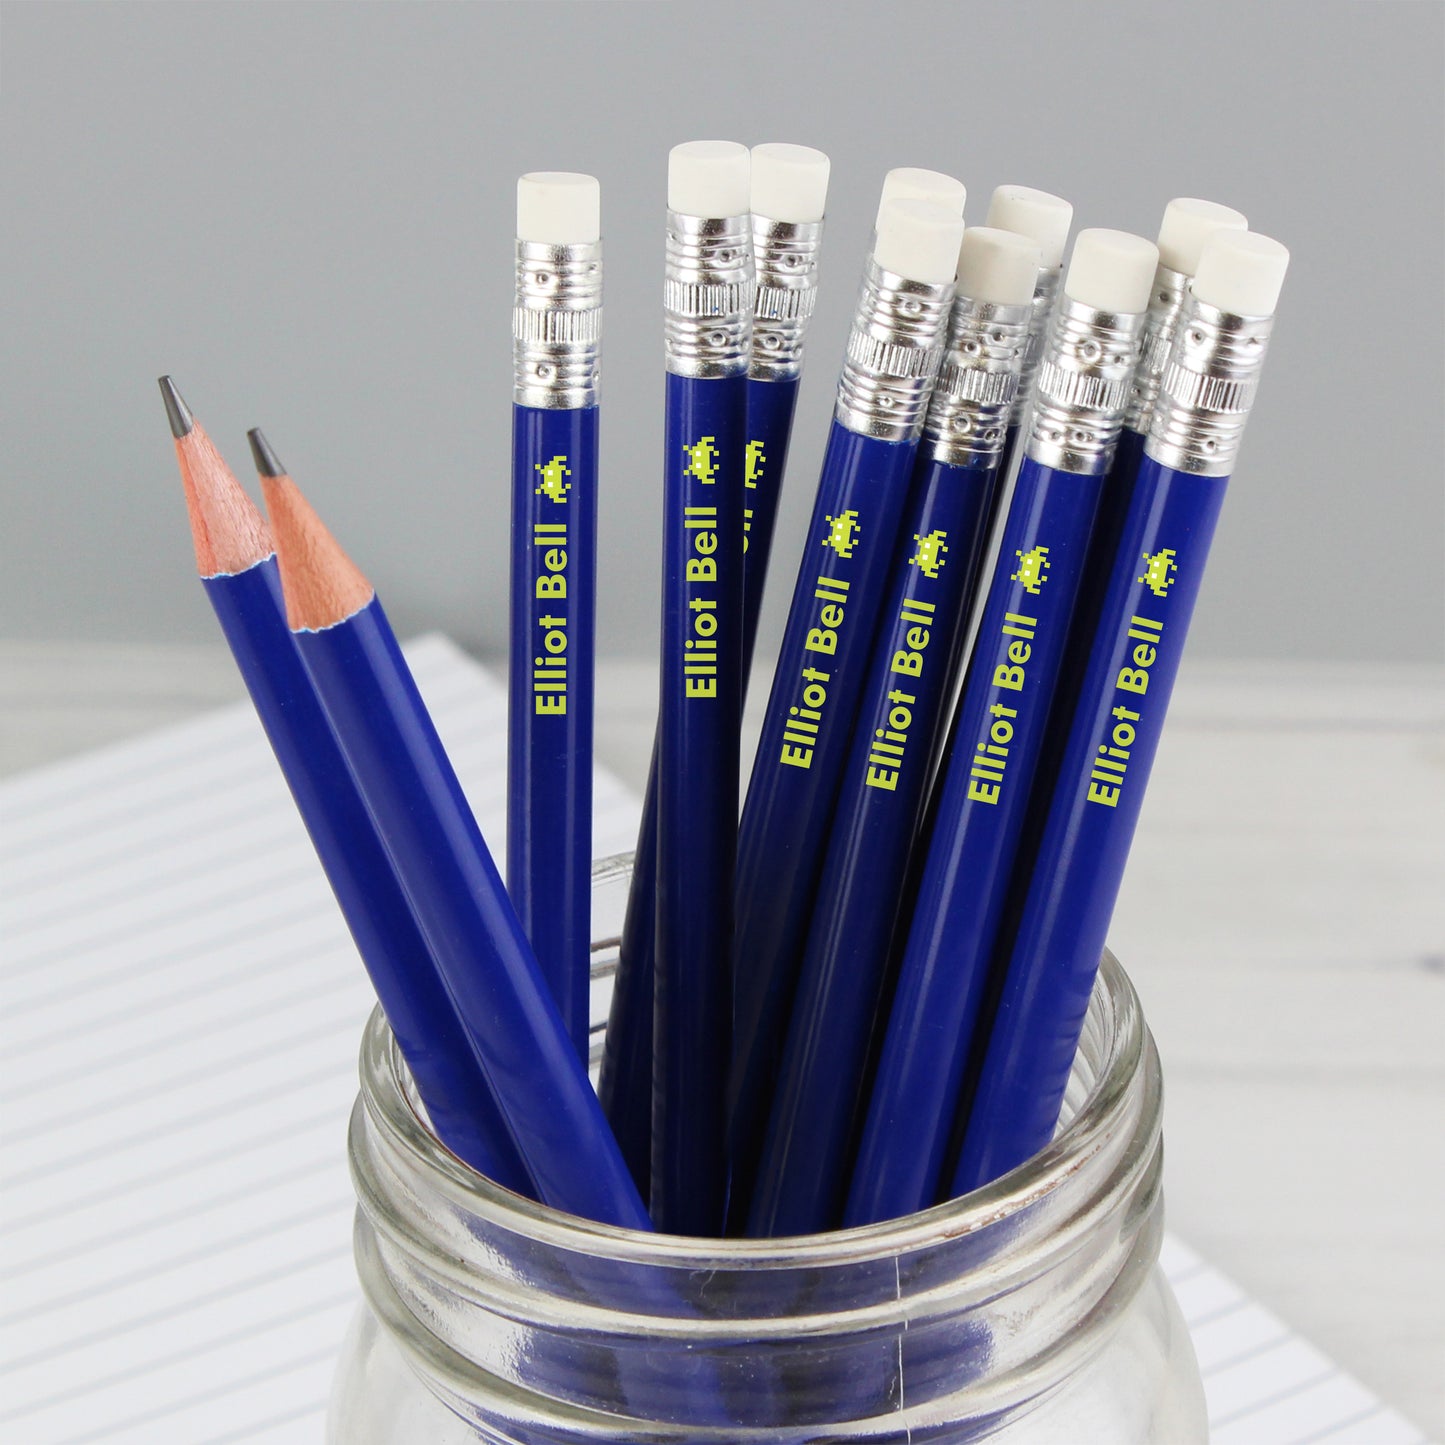 Personalised Alien Motif Blue Pencils - Personalise It!